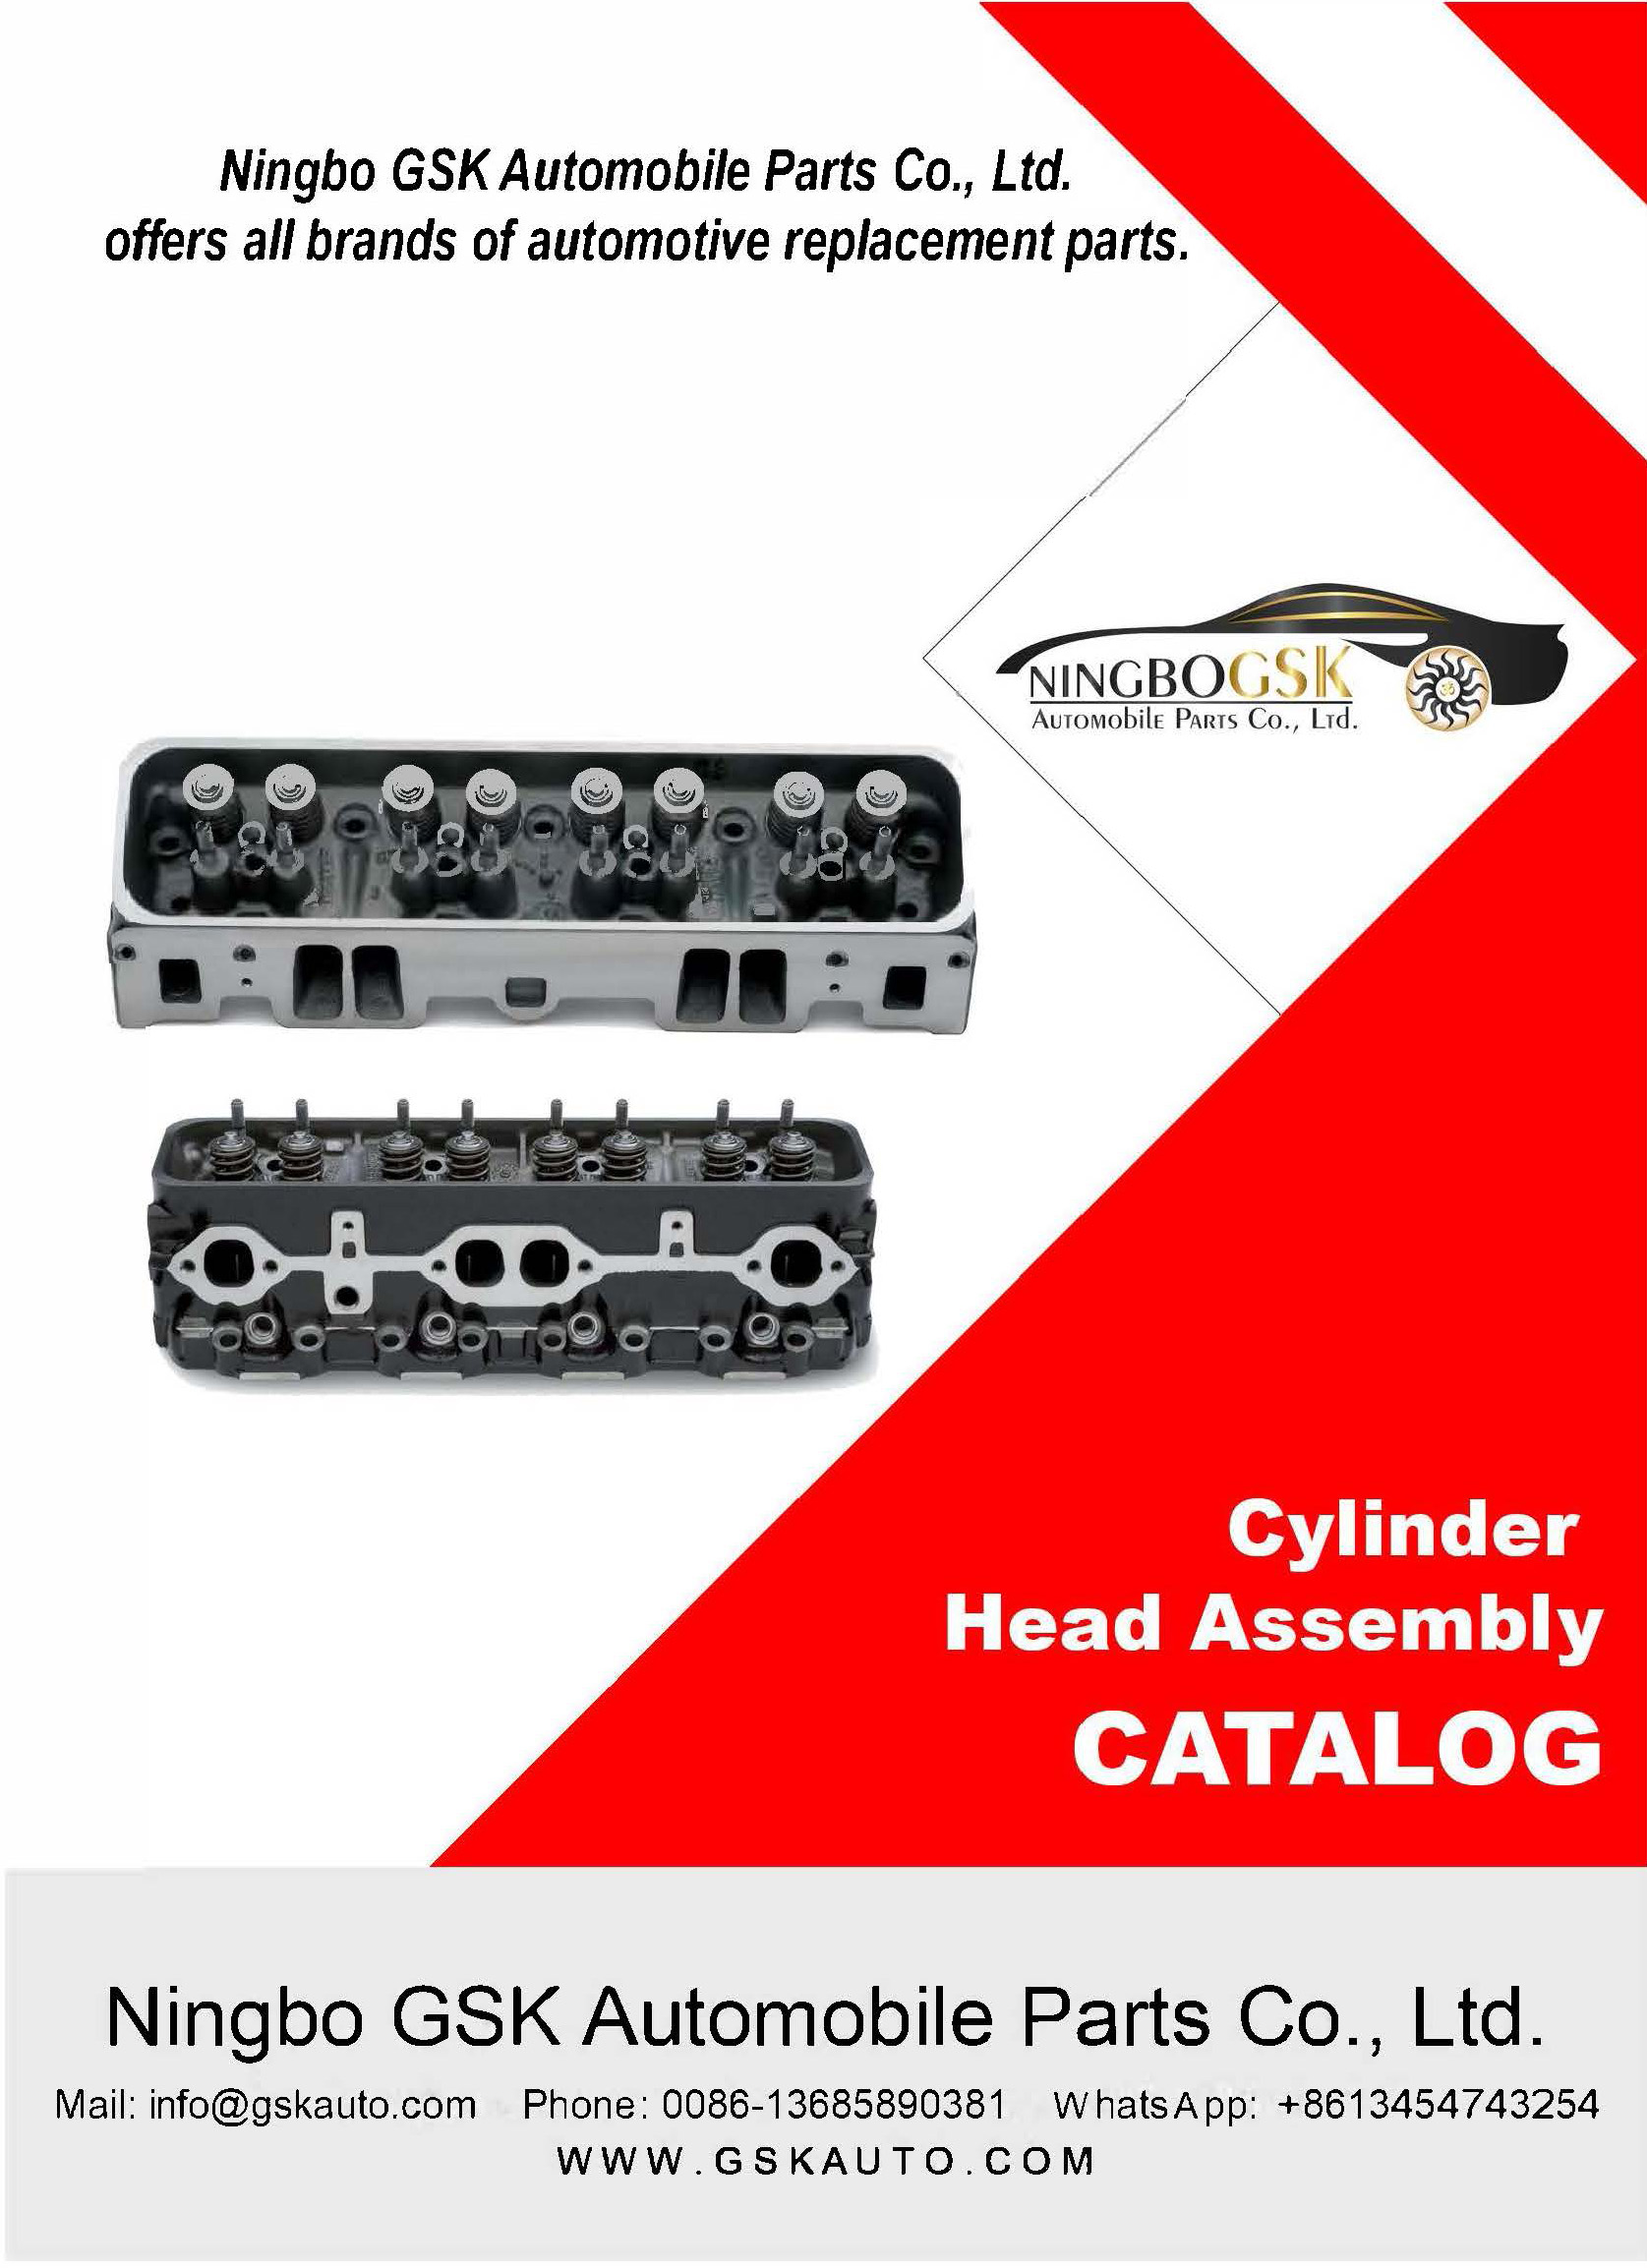 Cylinder Head Assembly Catalog